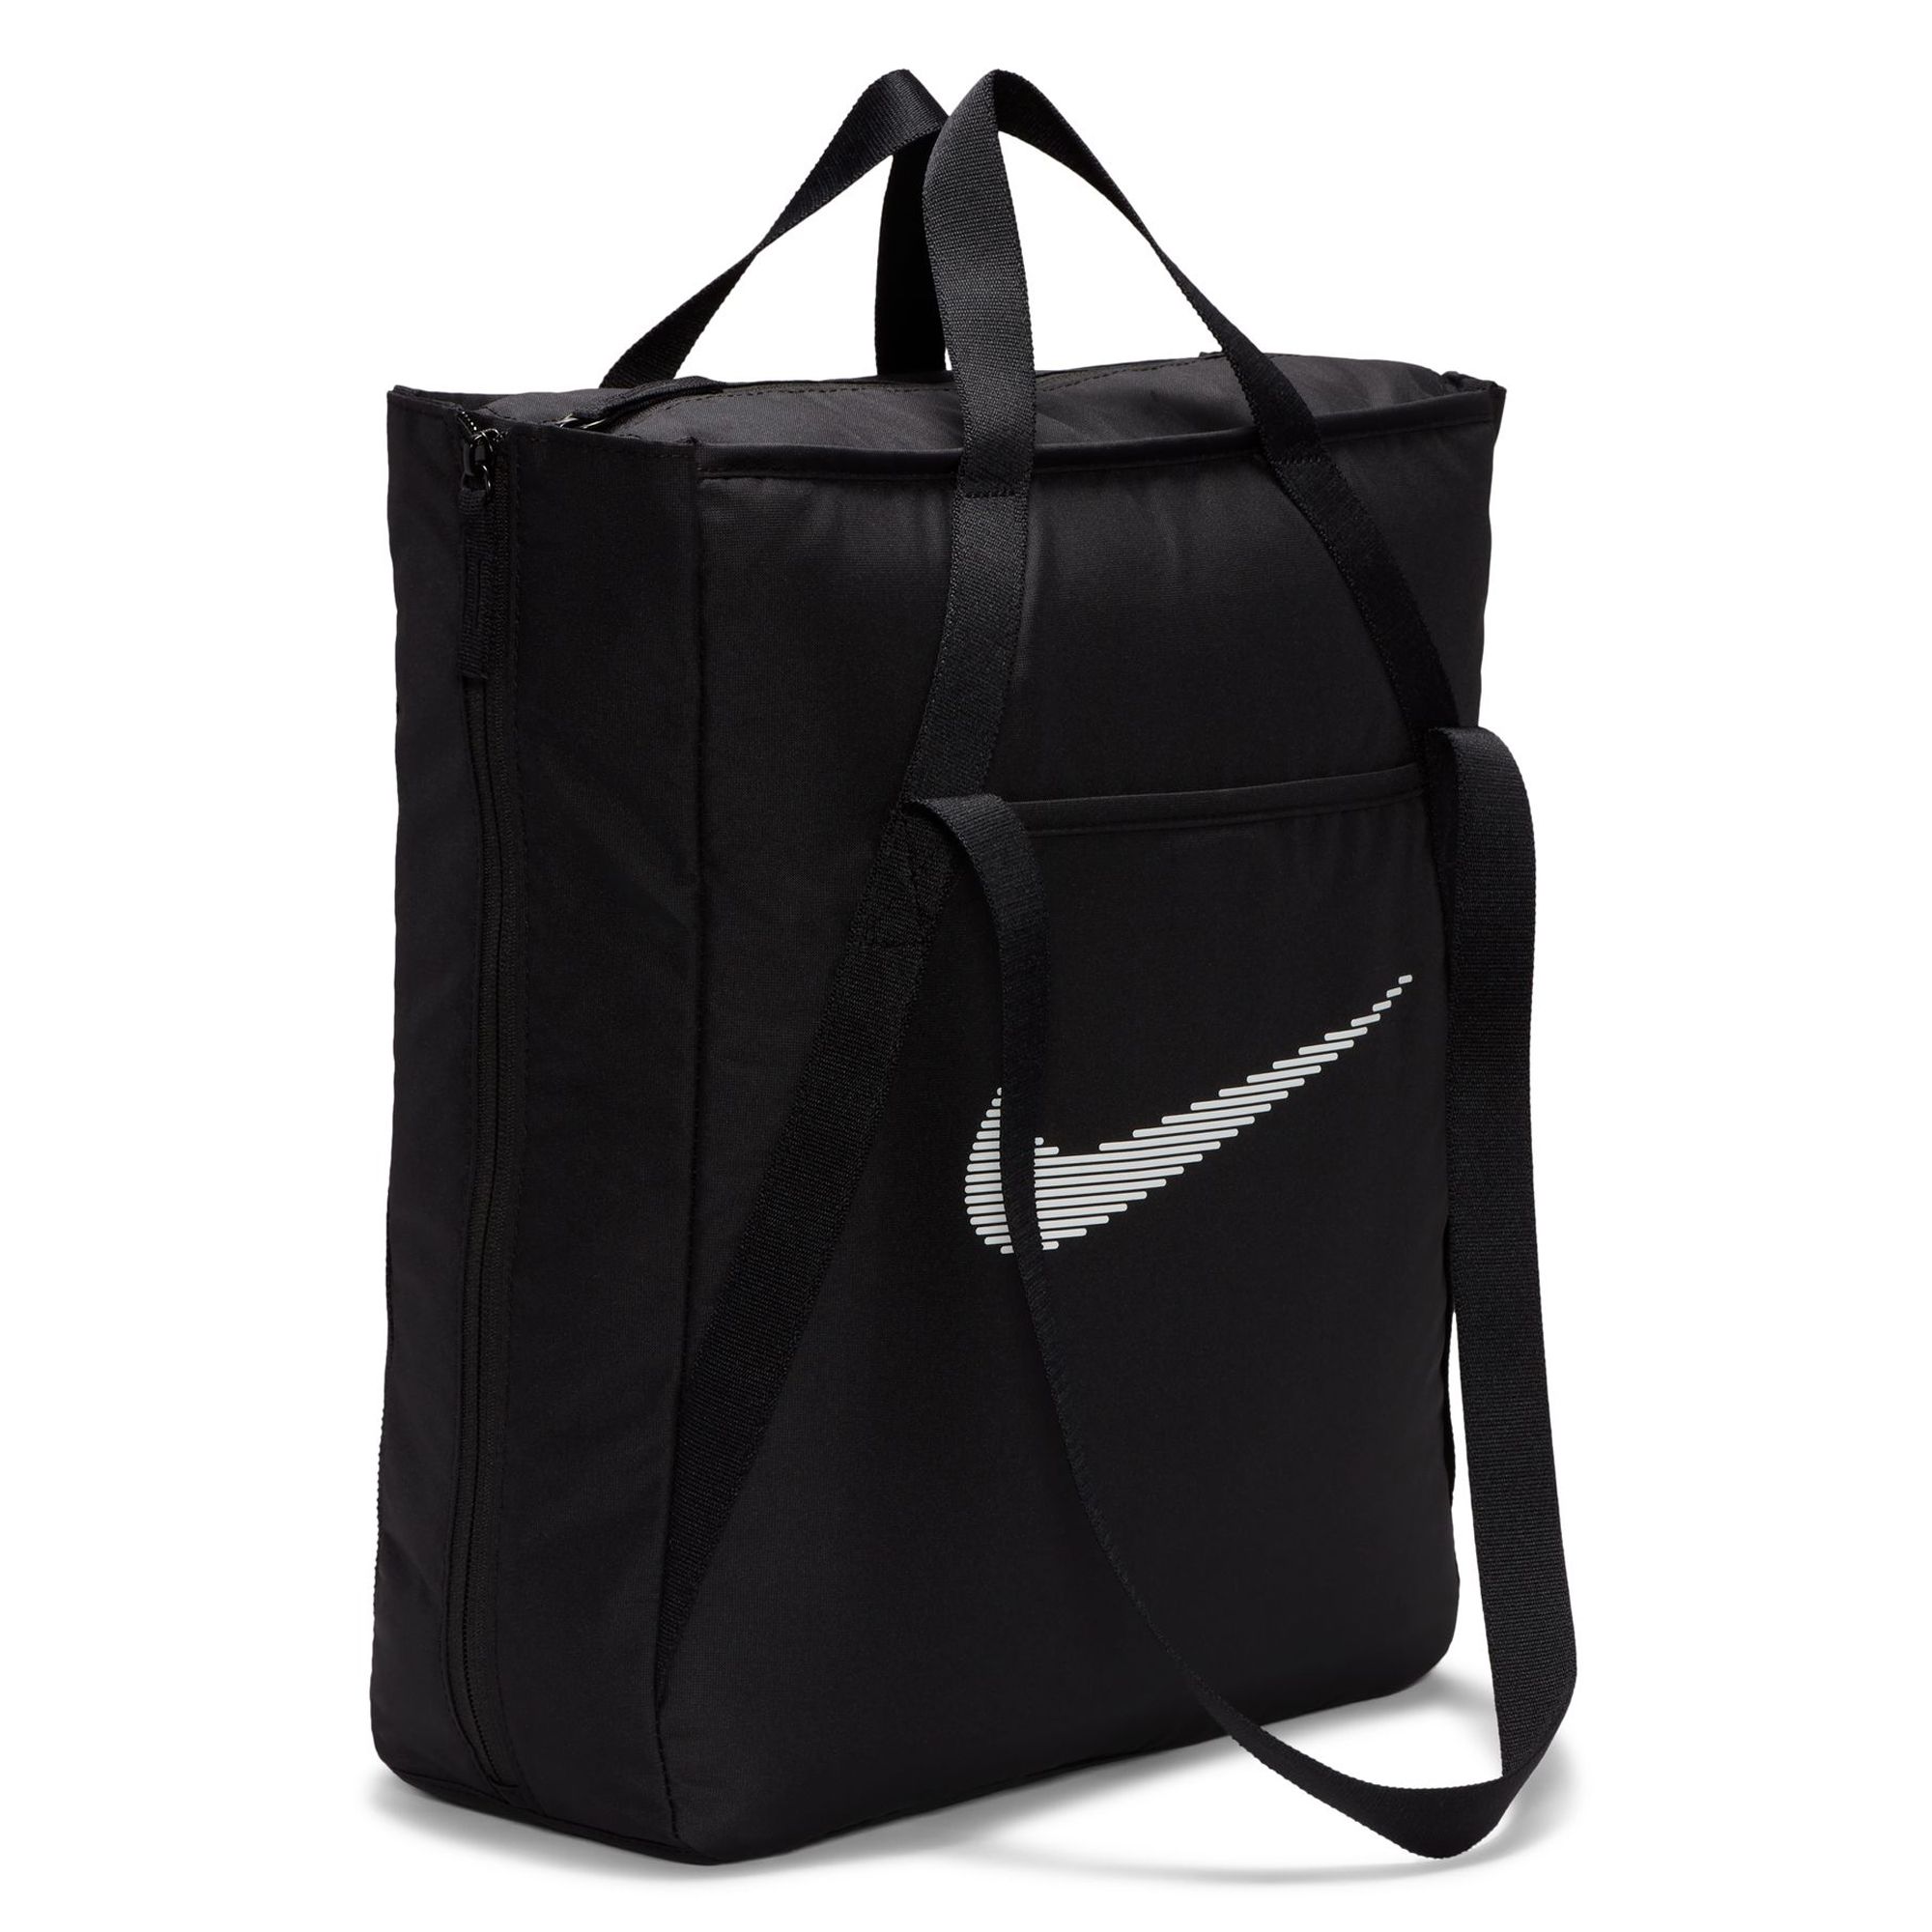 Buy the Nike Black Gym Tote Bag